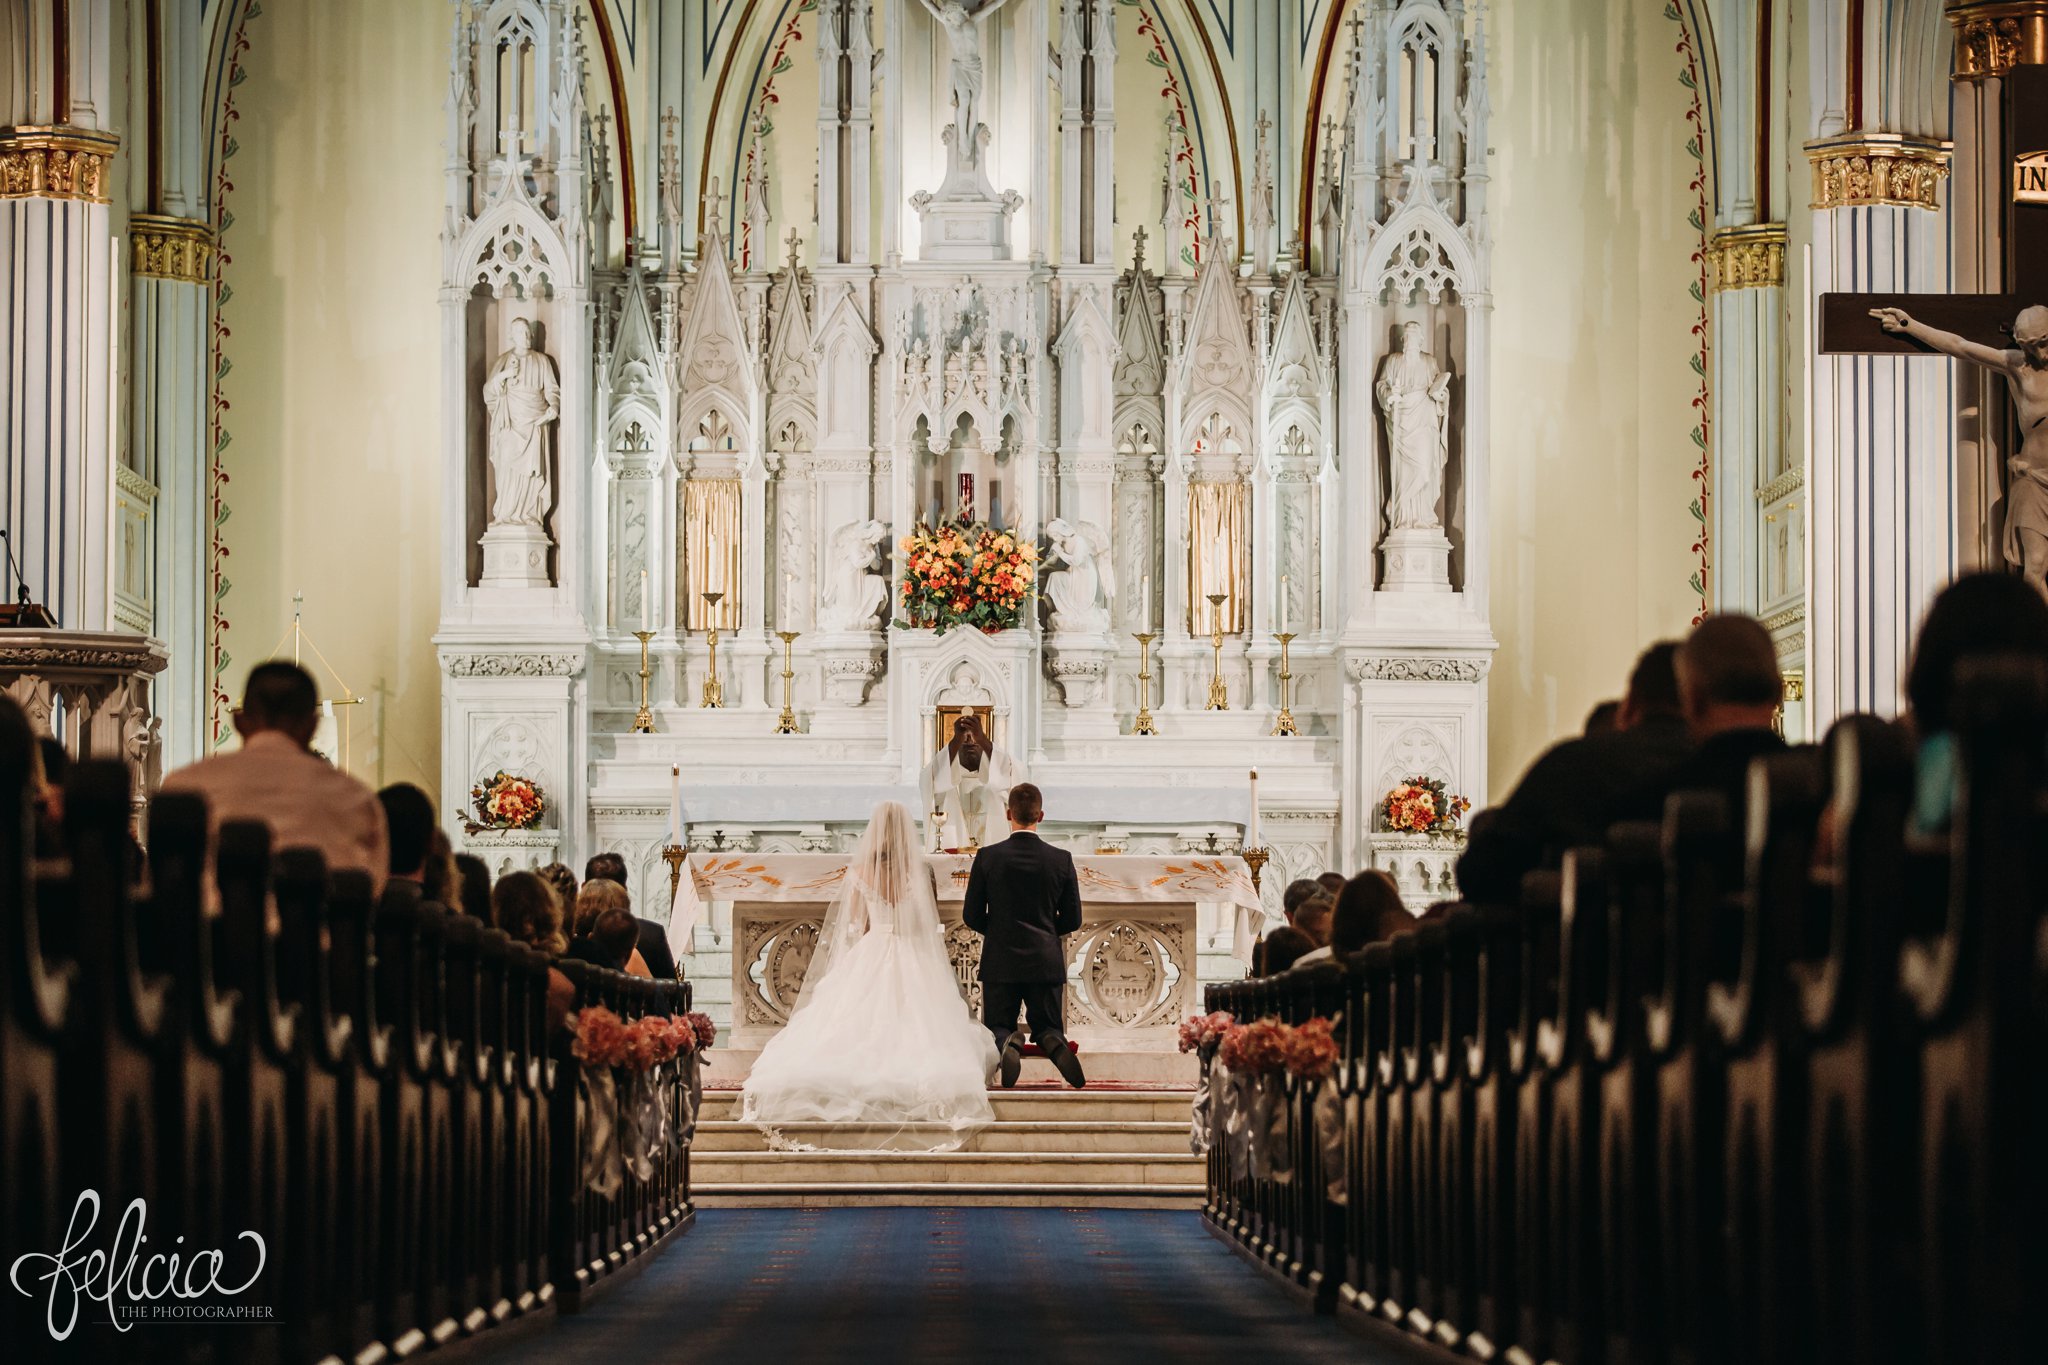 images by feliciathephotographer.com | wedding photographer | kansas city | redemptorist | classic | catholic | bride and groom | kneeling prayer | our lady of perpetual help | symmetrical | pews | true love | romantic | 